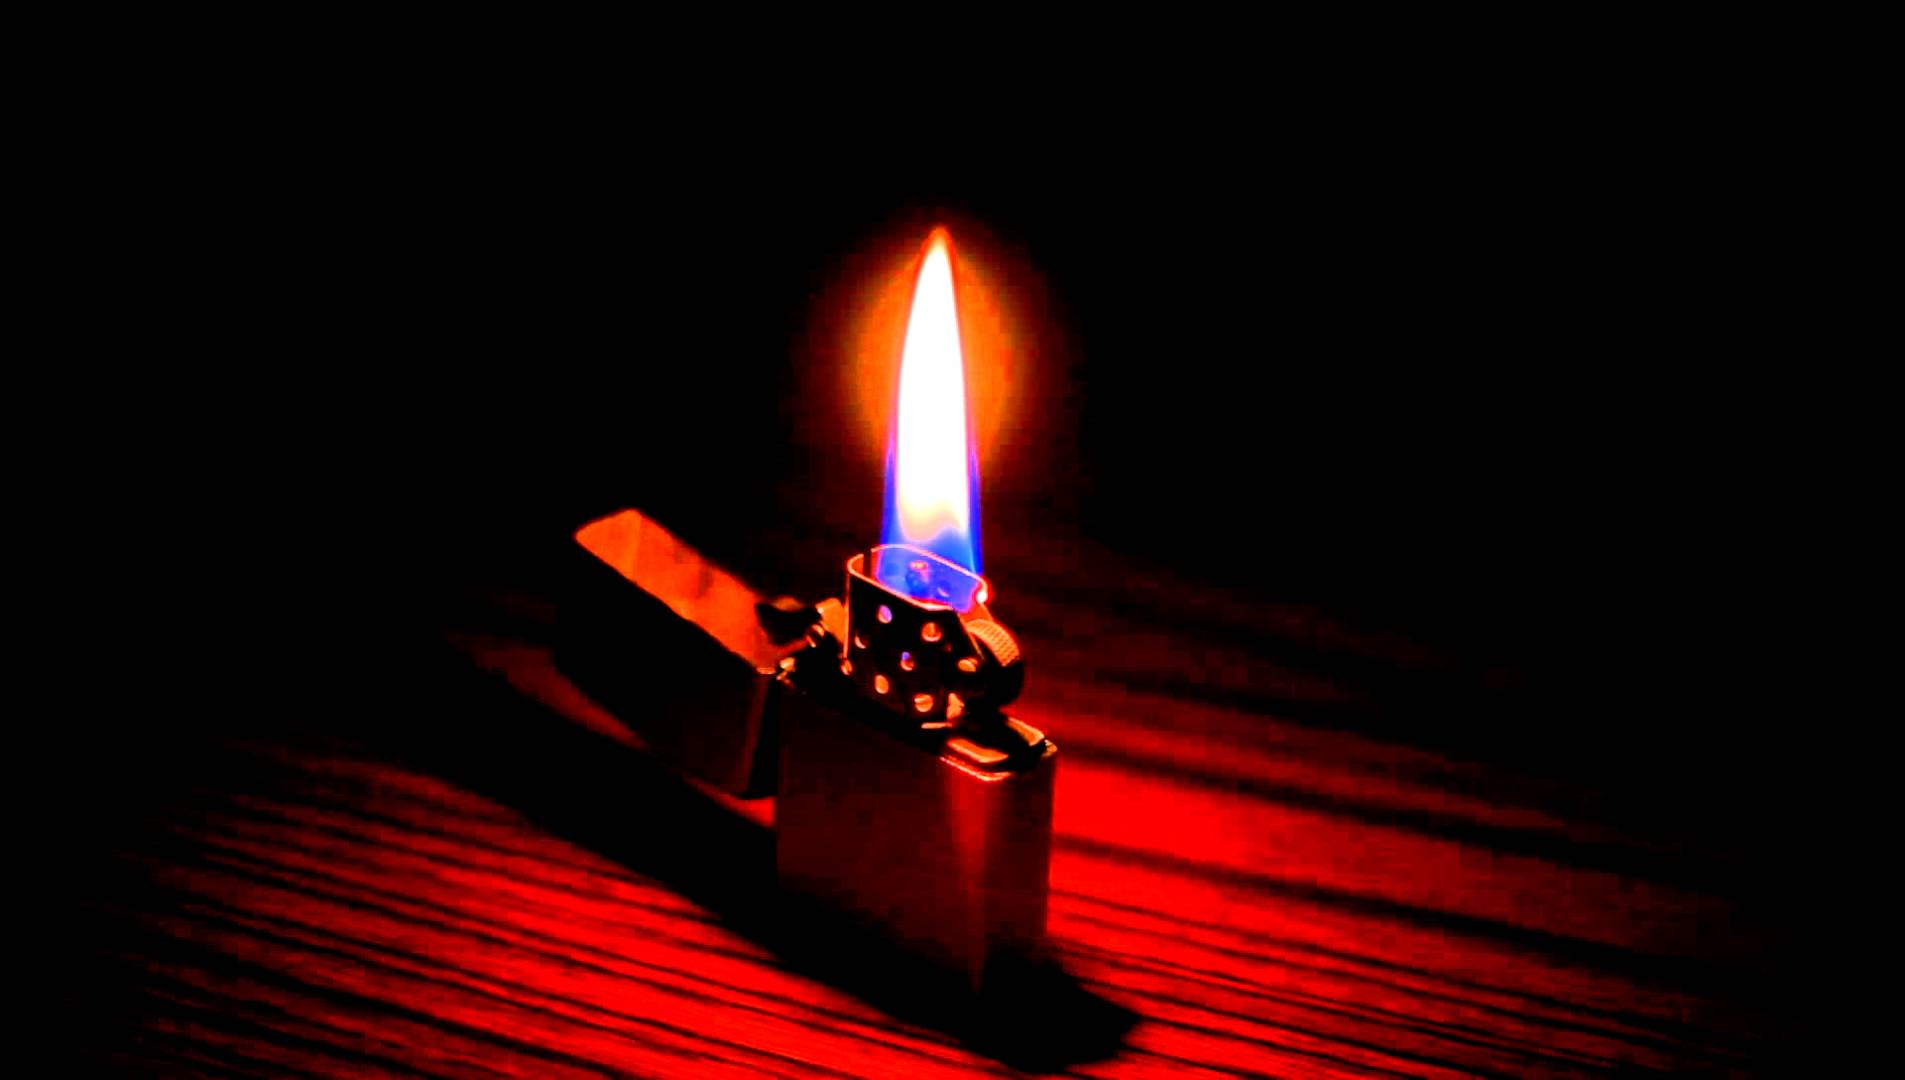 Zippo lighter flame - YouTube